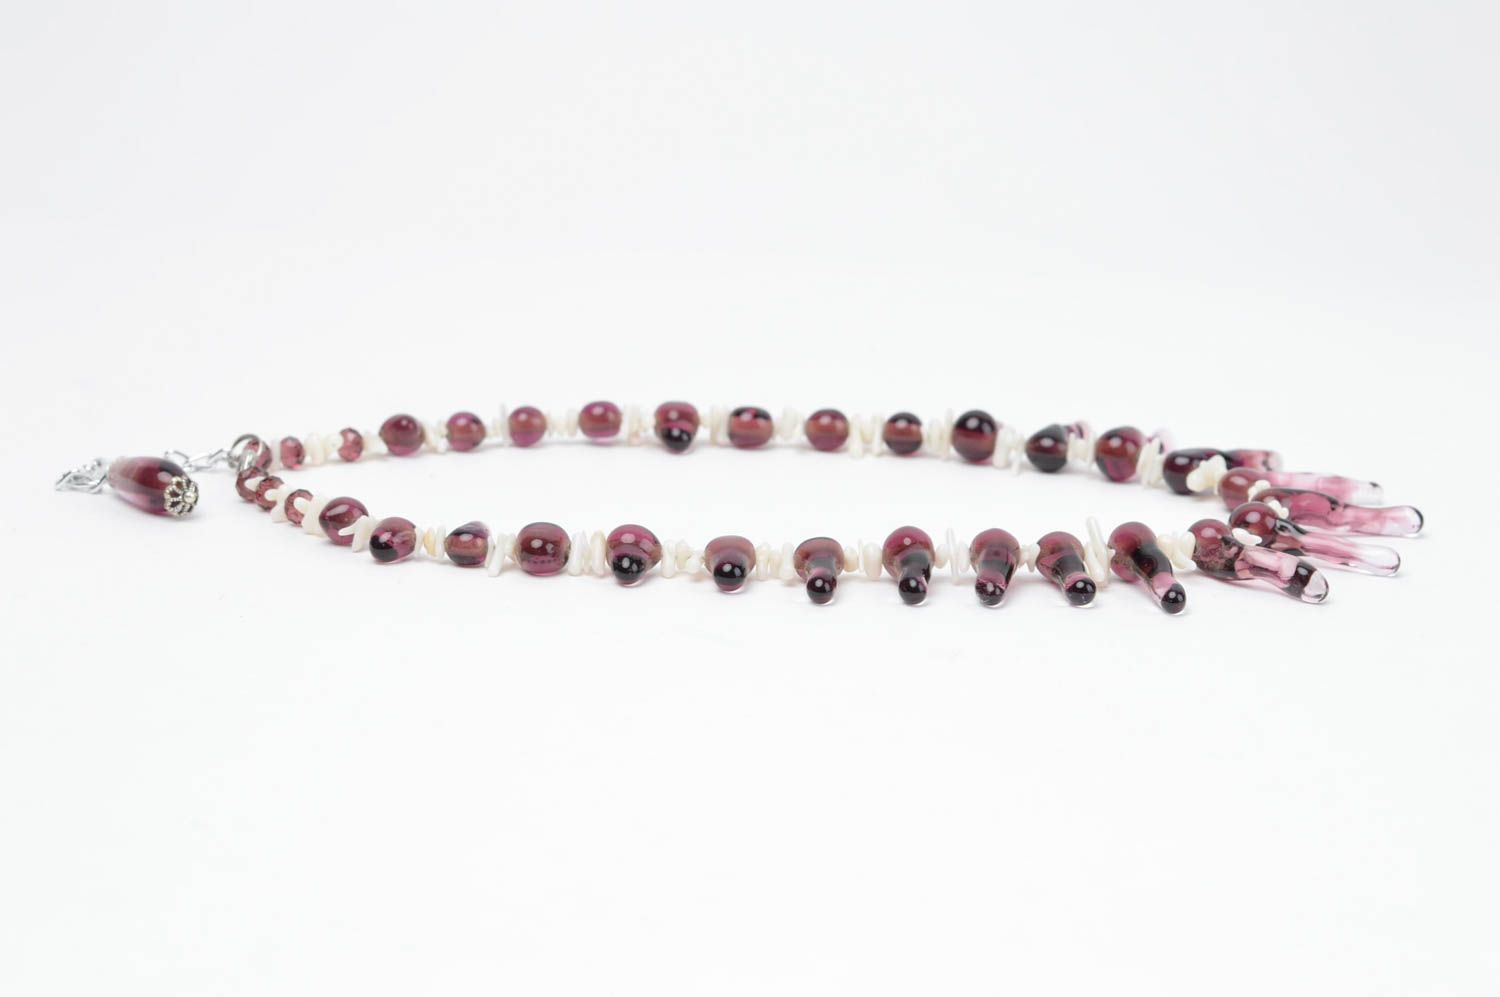 Beautiful handmade glass bead necklace beadwork ideas accessories for girls photo 4